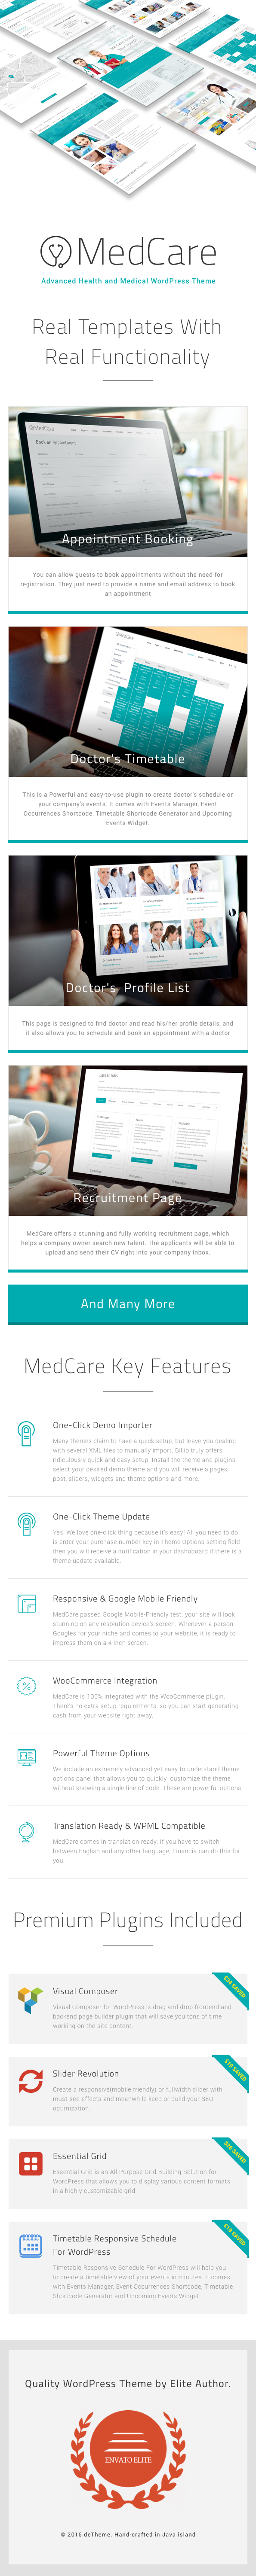 MedCare - Advanced Health & Medical WordPress Theme - 1